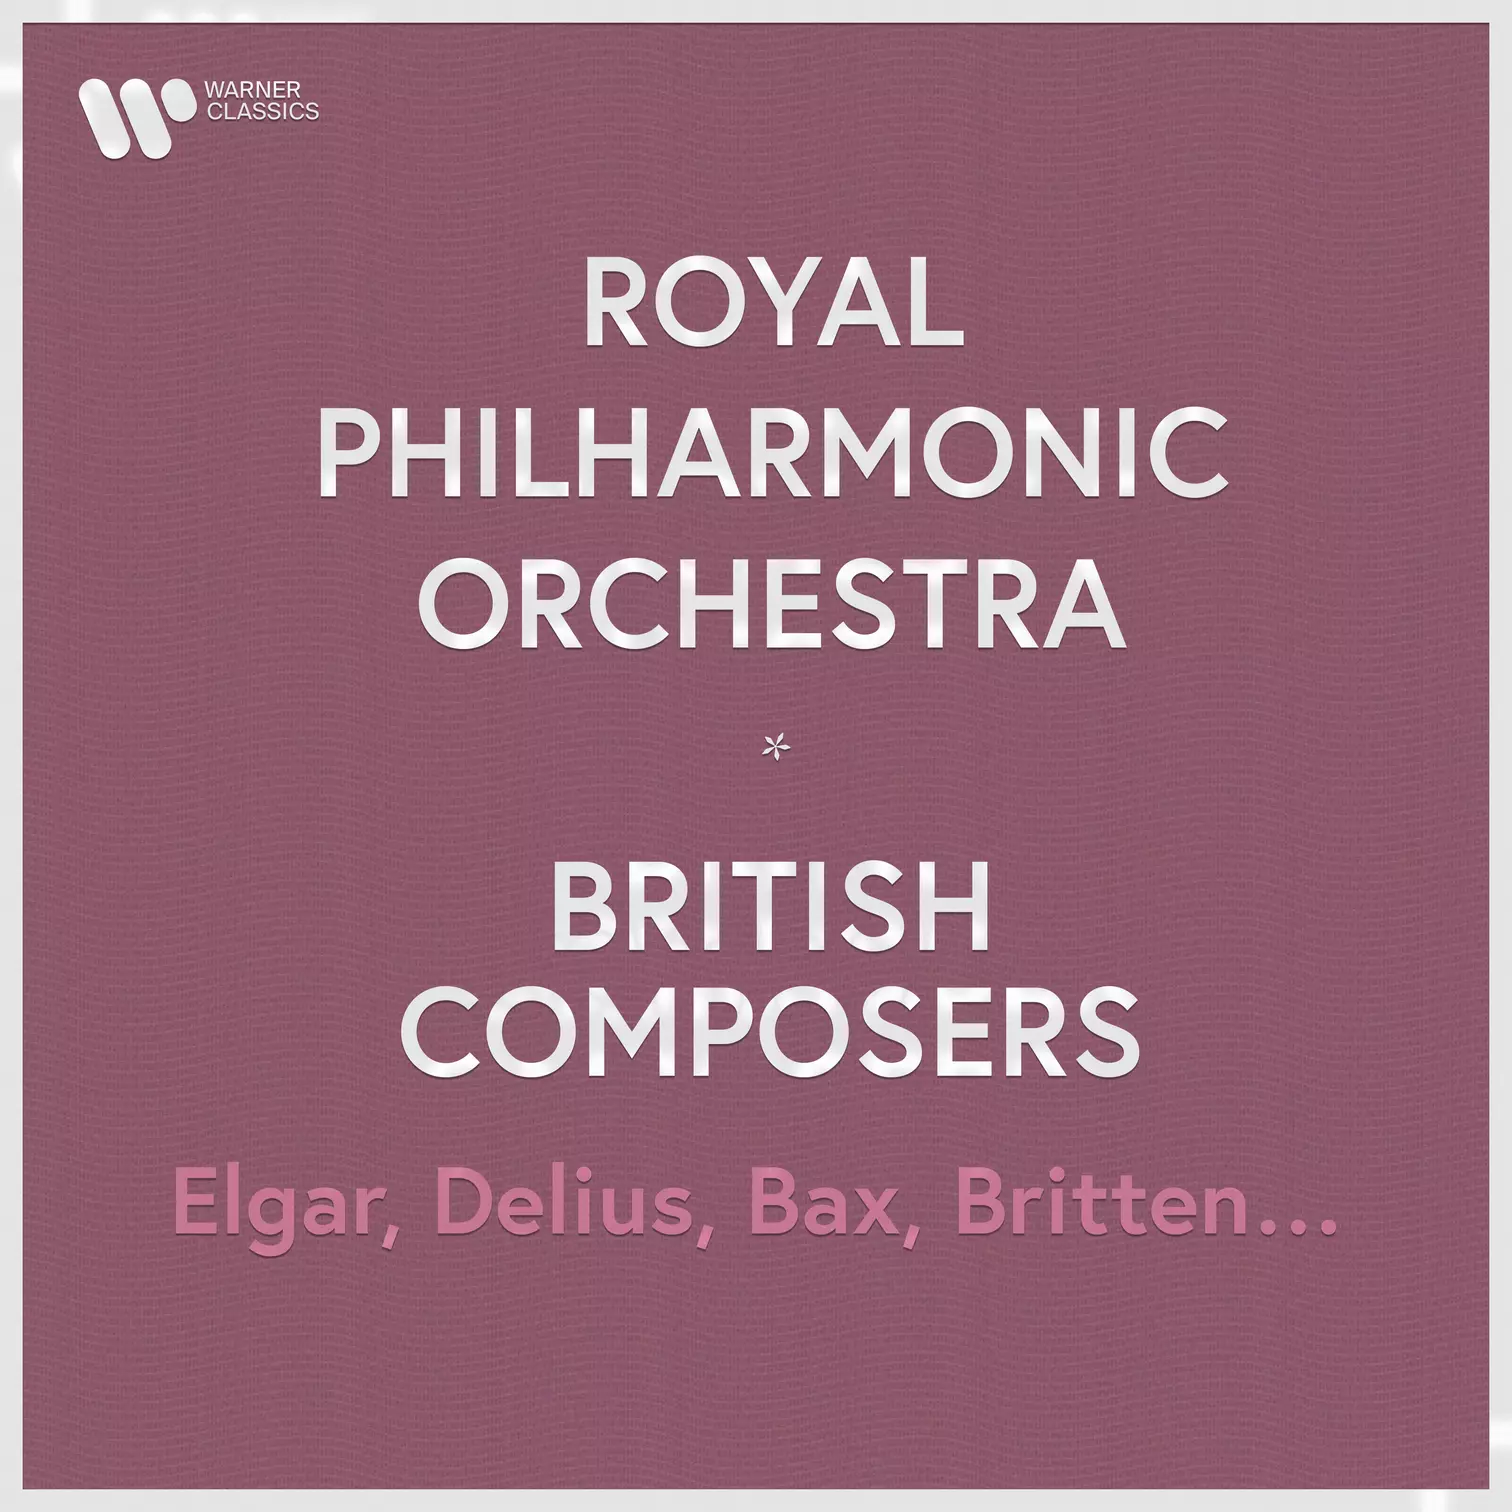 Royal Philharmonic Orchestra - British Composers. Elgar, Delius, Bax, Britten…